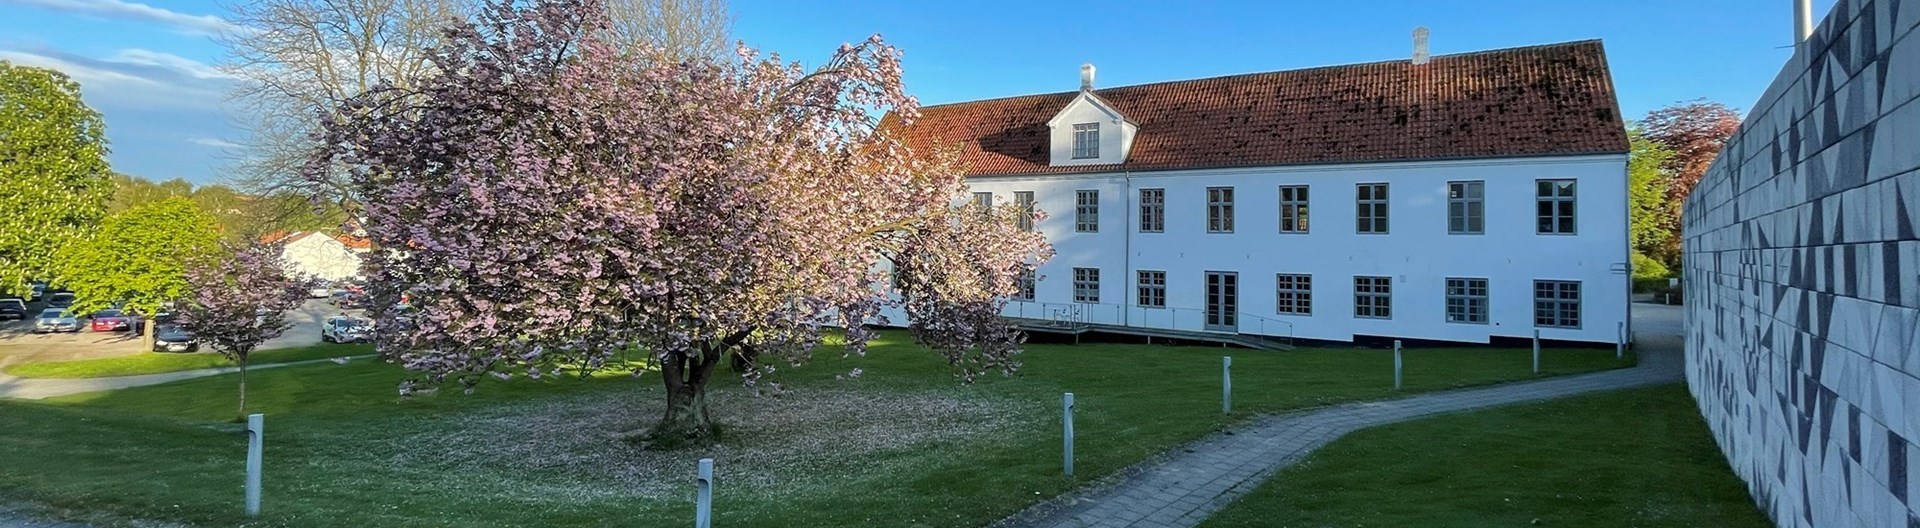 Viborg Kunsthals have